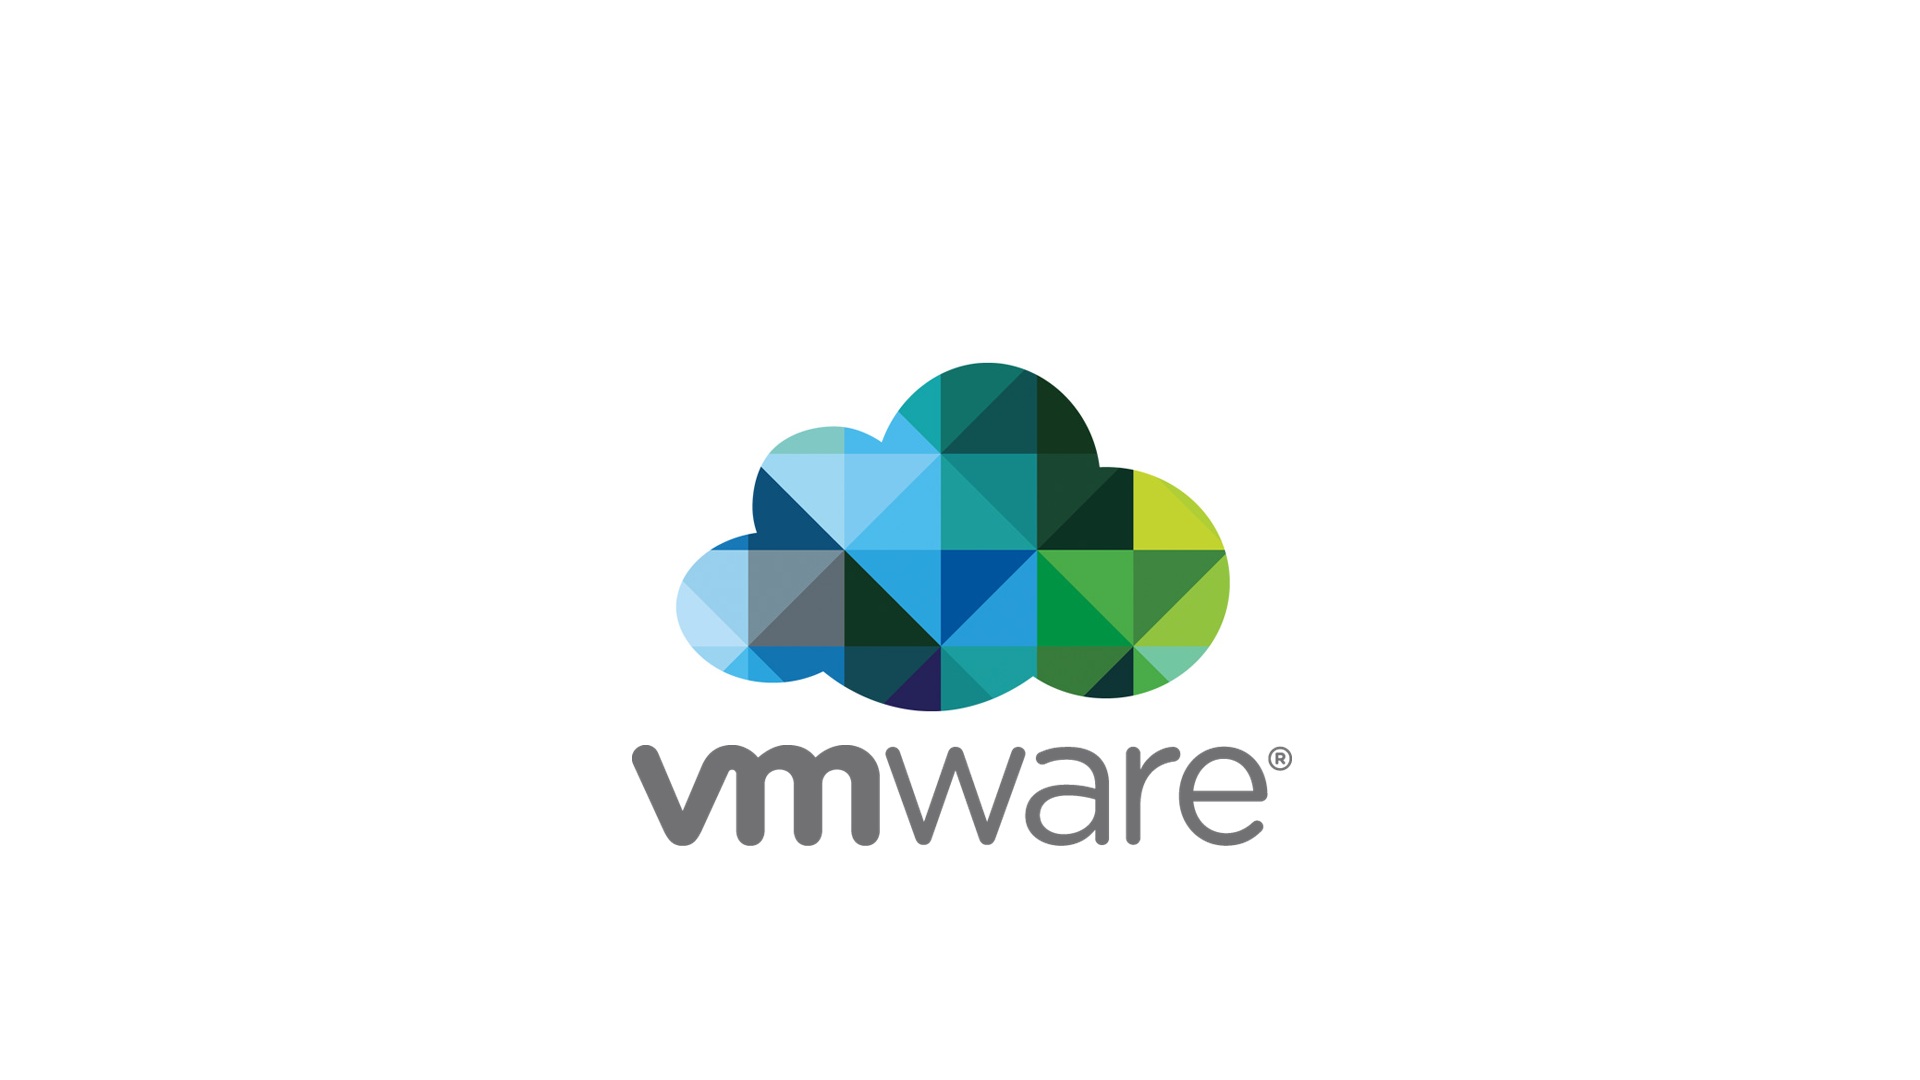 VMware Horizon 7: Install, Configure, Manage [V7.10]